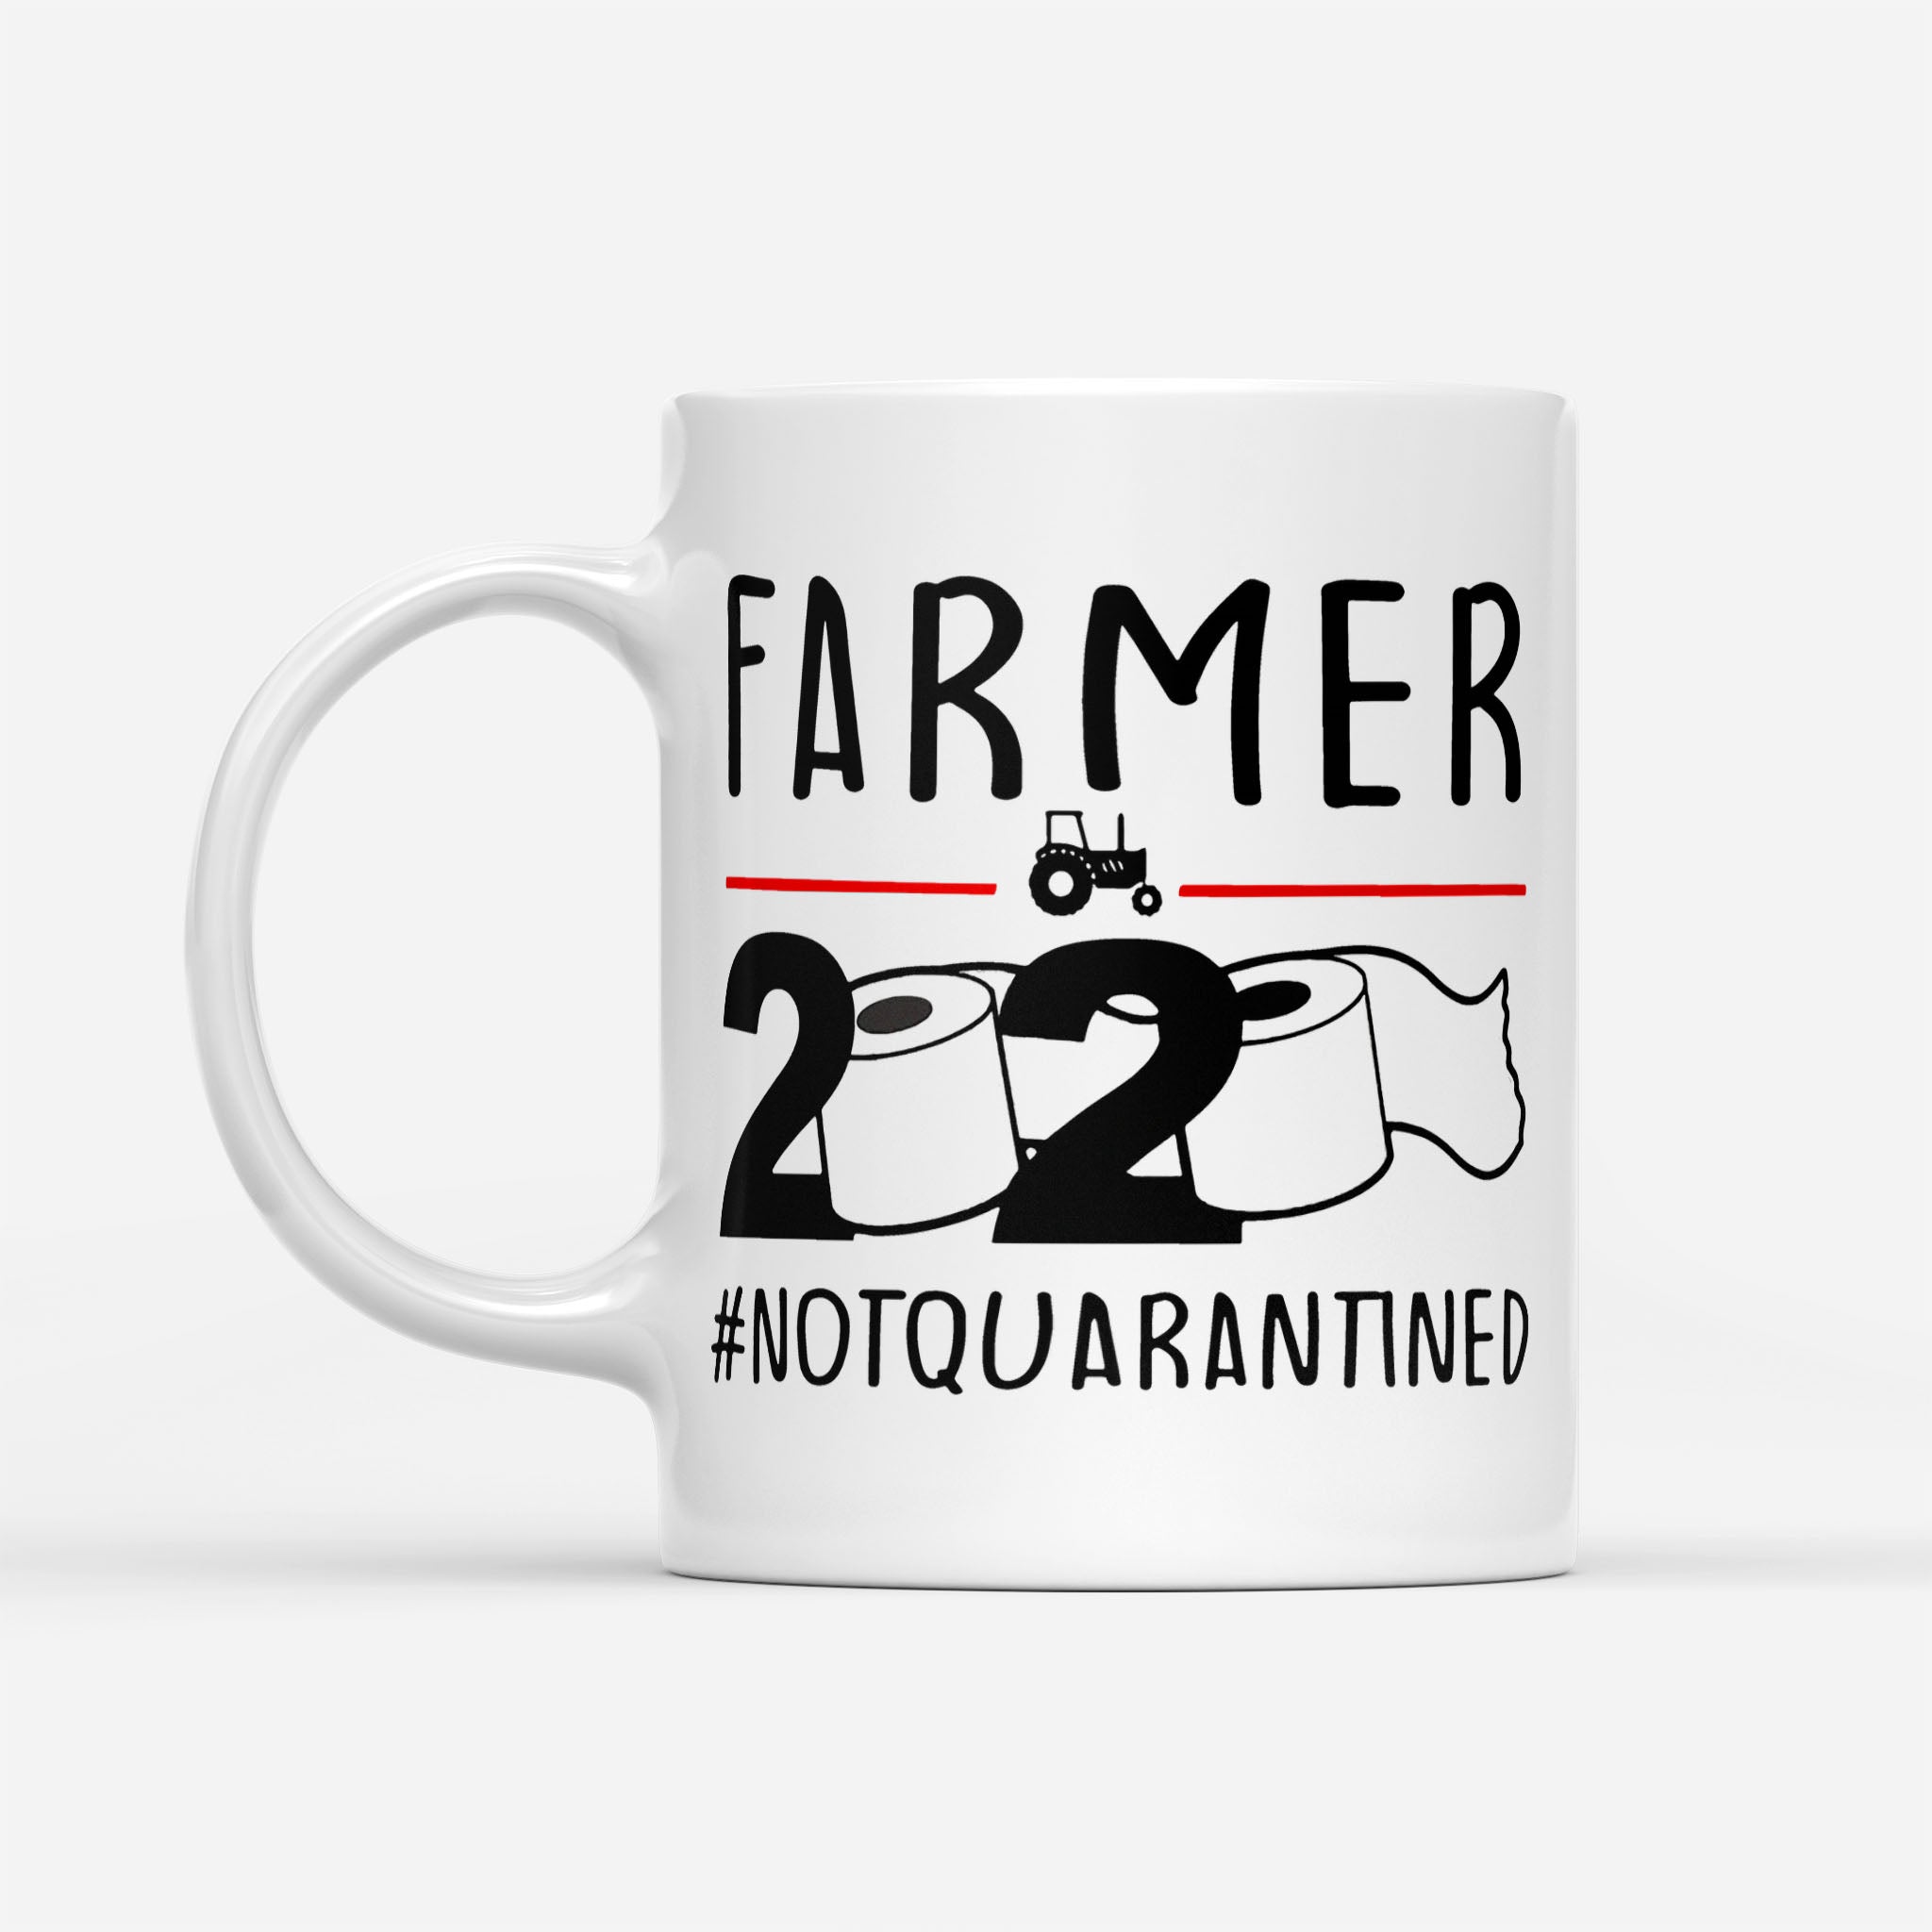 Farmer 2020 Not Quarantined - White Mug